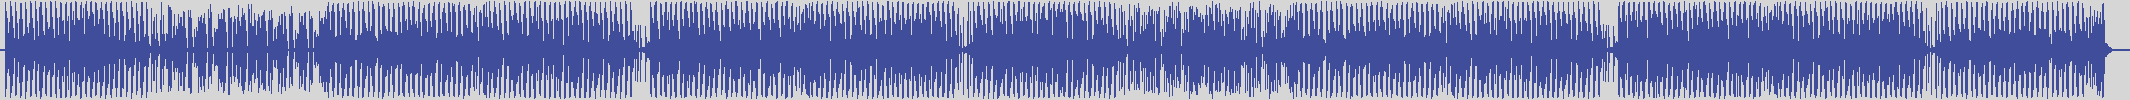 nf_boyz_records [NFY027] Beach Sonoric - Roborho [Cocorito's Beach Mix] audio wave form